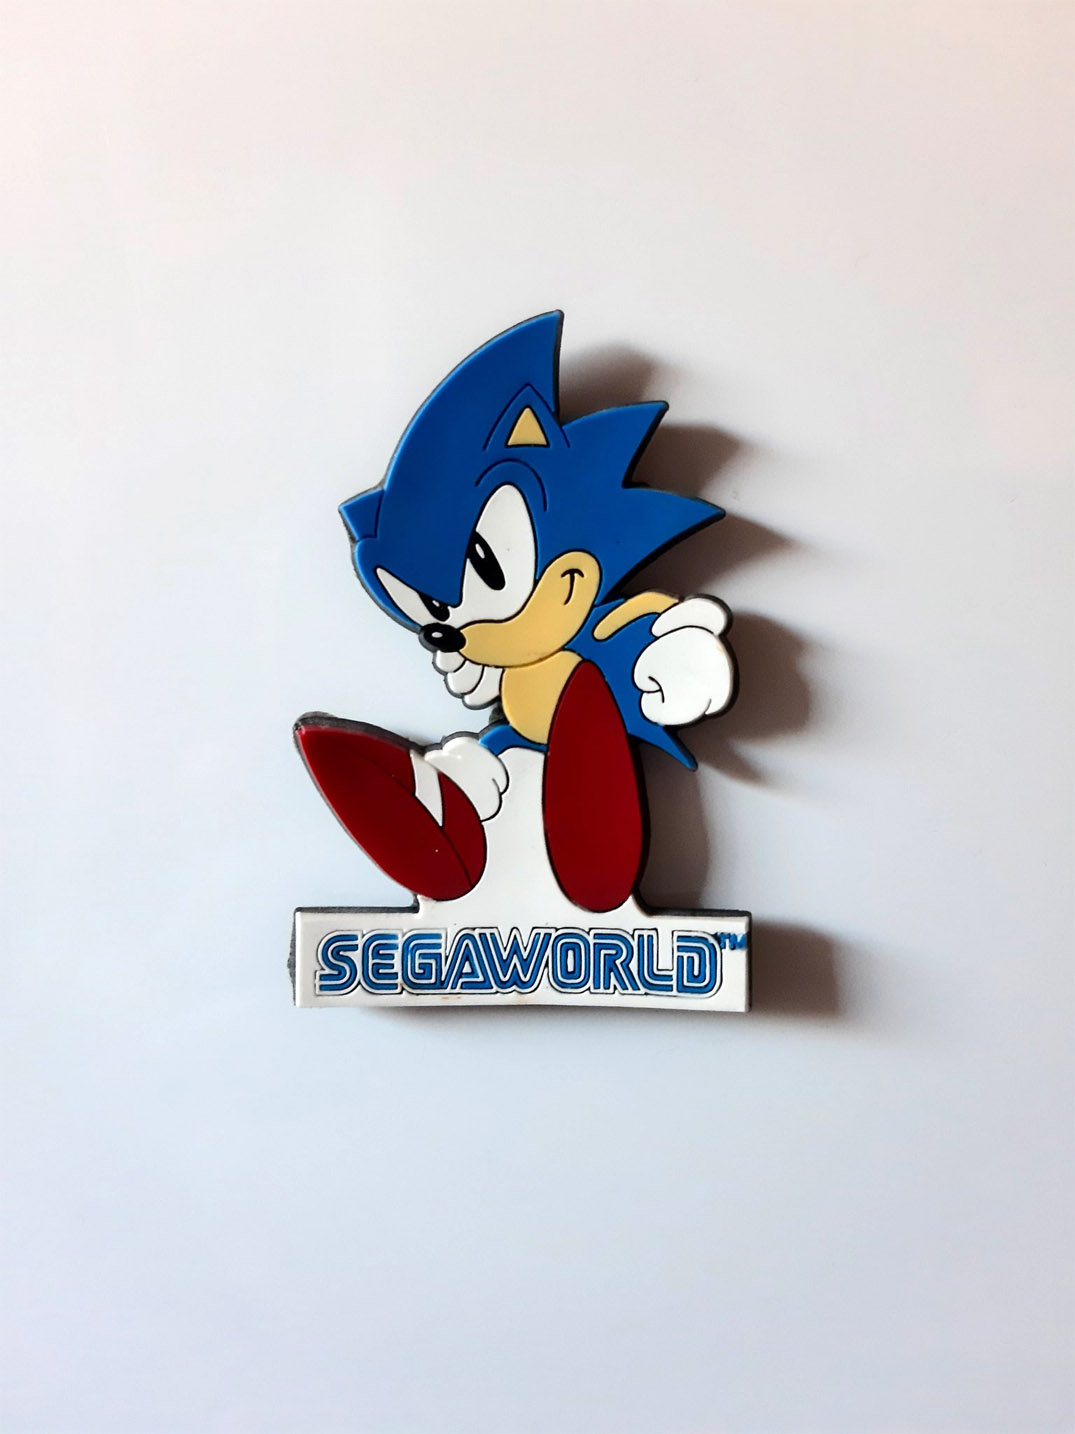 Sonic The Hedgehog (2006) magnets, SEGA Europe